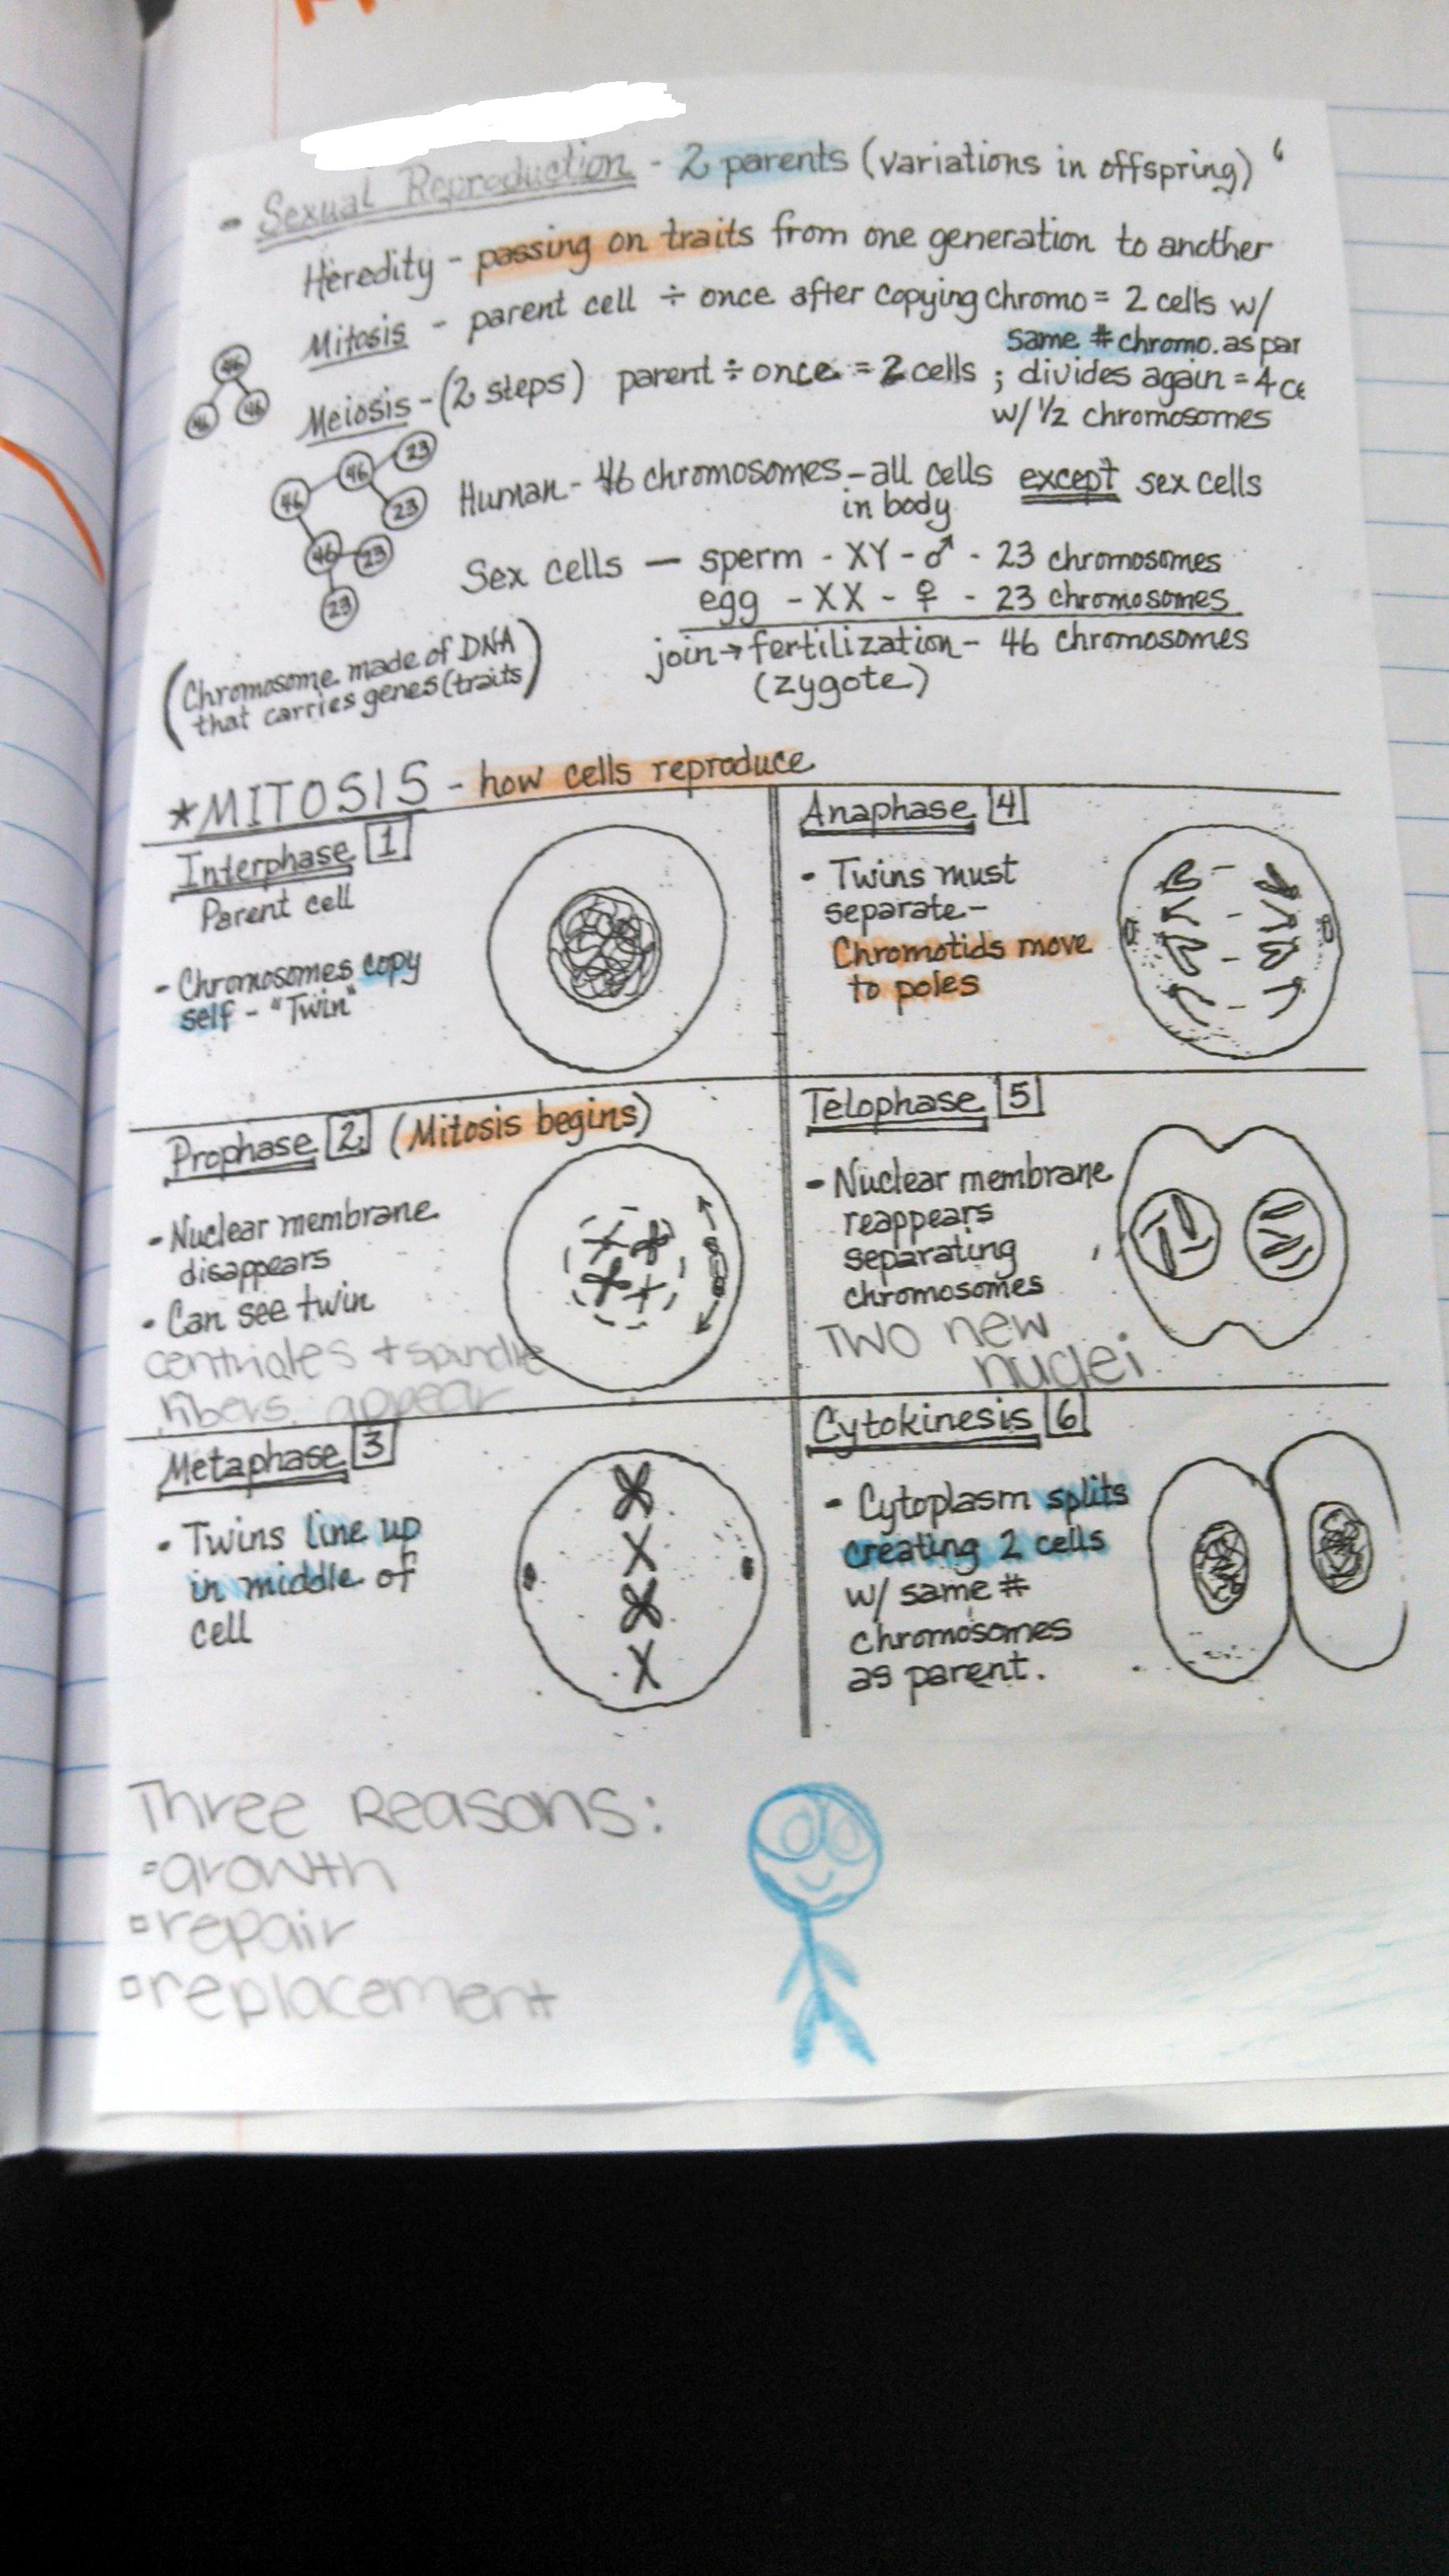 meiosis-worksheet-answer-key-biology-corner-mitosis-coloring-key-by-biologycorner-teachers-pay